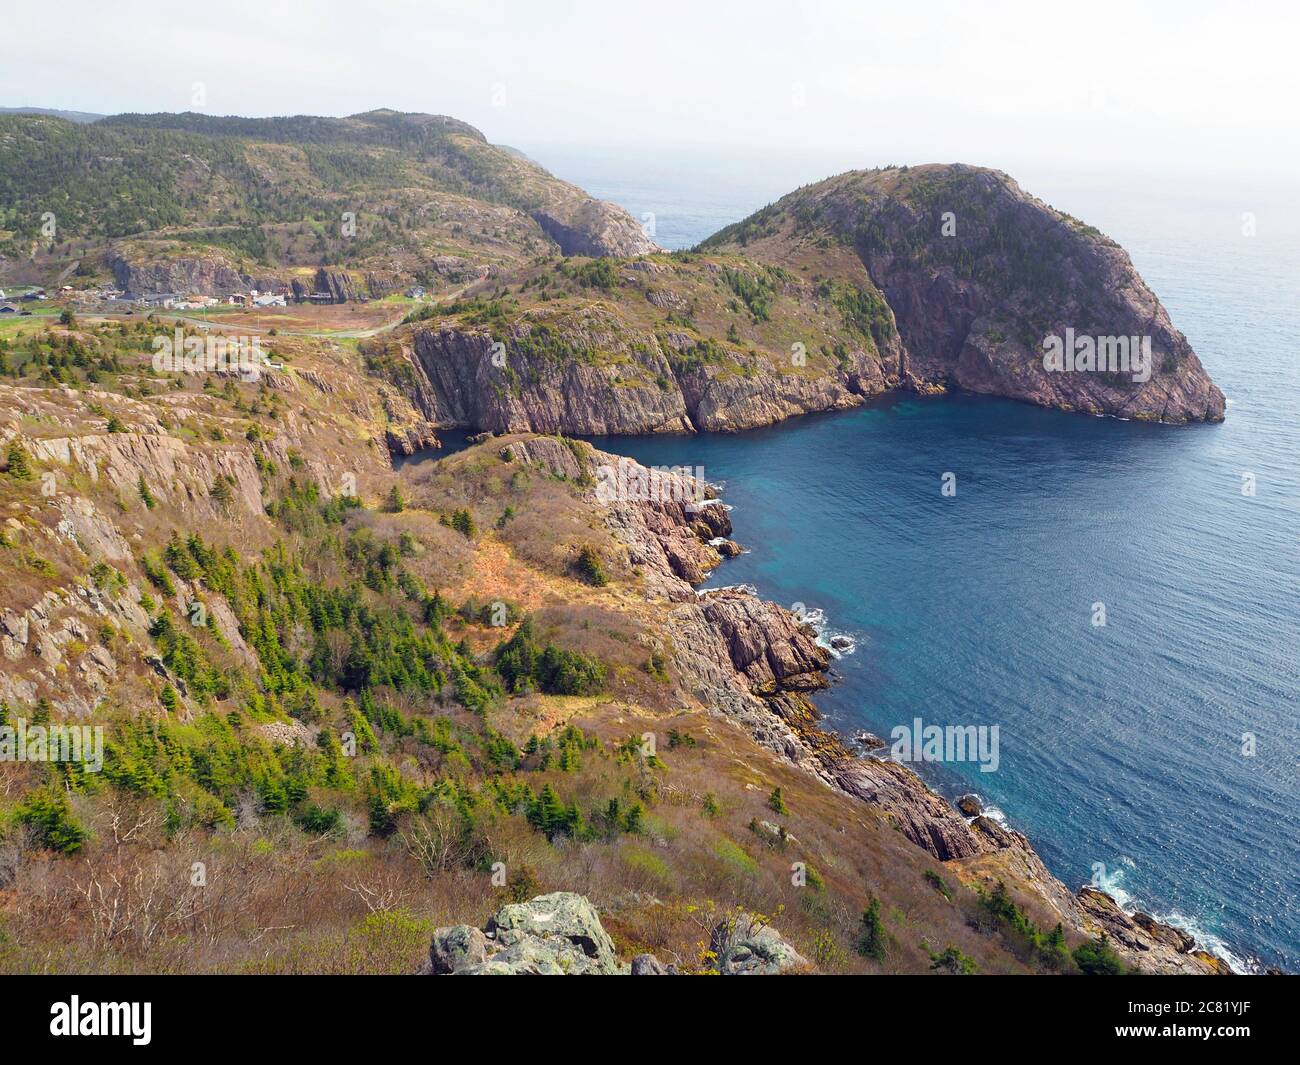 Cuckold’s Cove, Signal Hill Peninsula, St John’s, Newfoundland, Newfoundland and Labrador, Canada Stock Photo